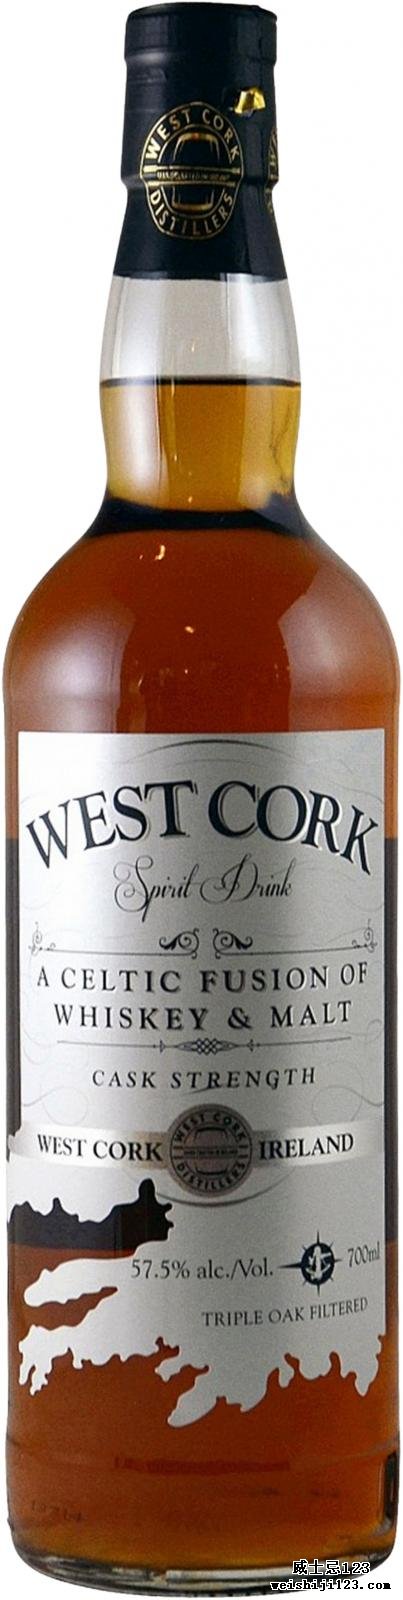 West Cork A Celtic Fusion of Whiskey & Malt